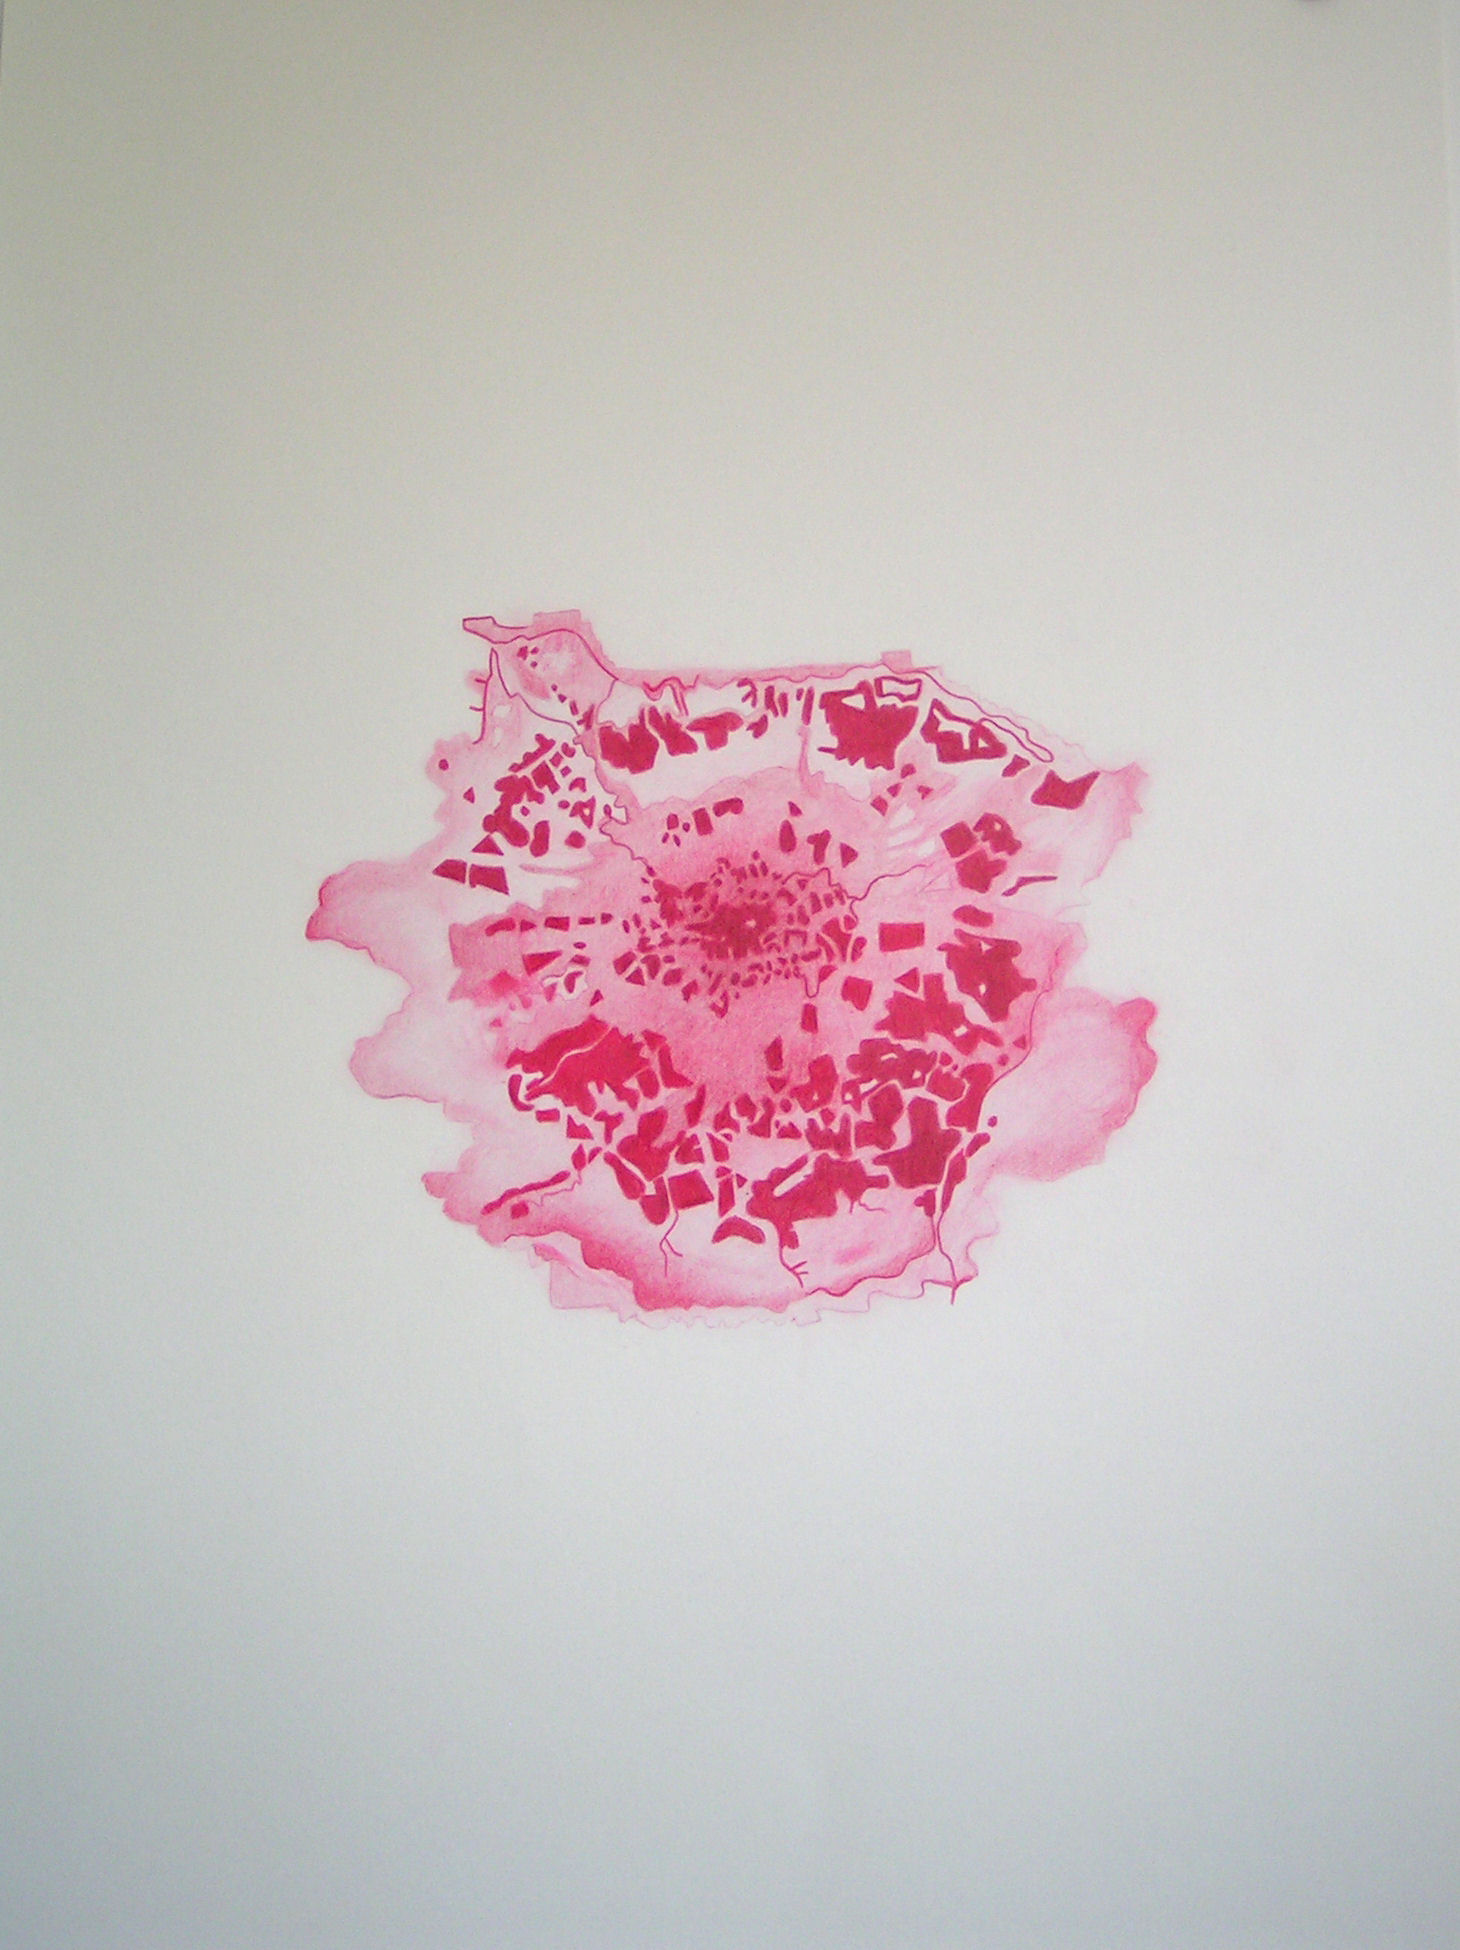 Emma J Williams 'Blooming London Series - Pink Carmine' 2008 pencil on paper